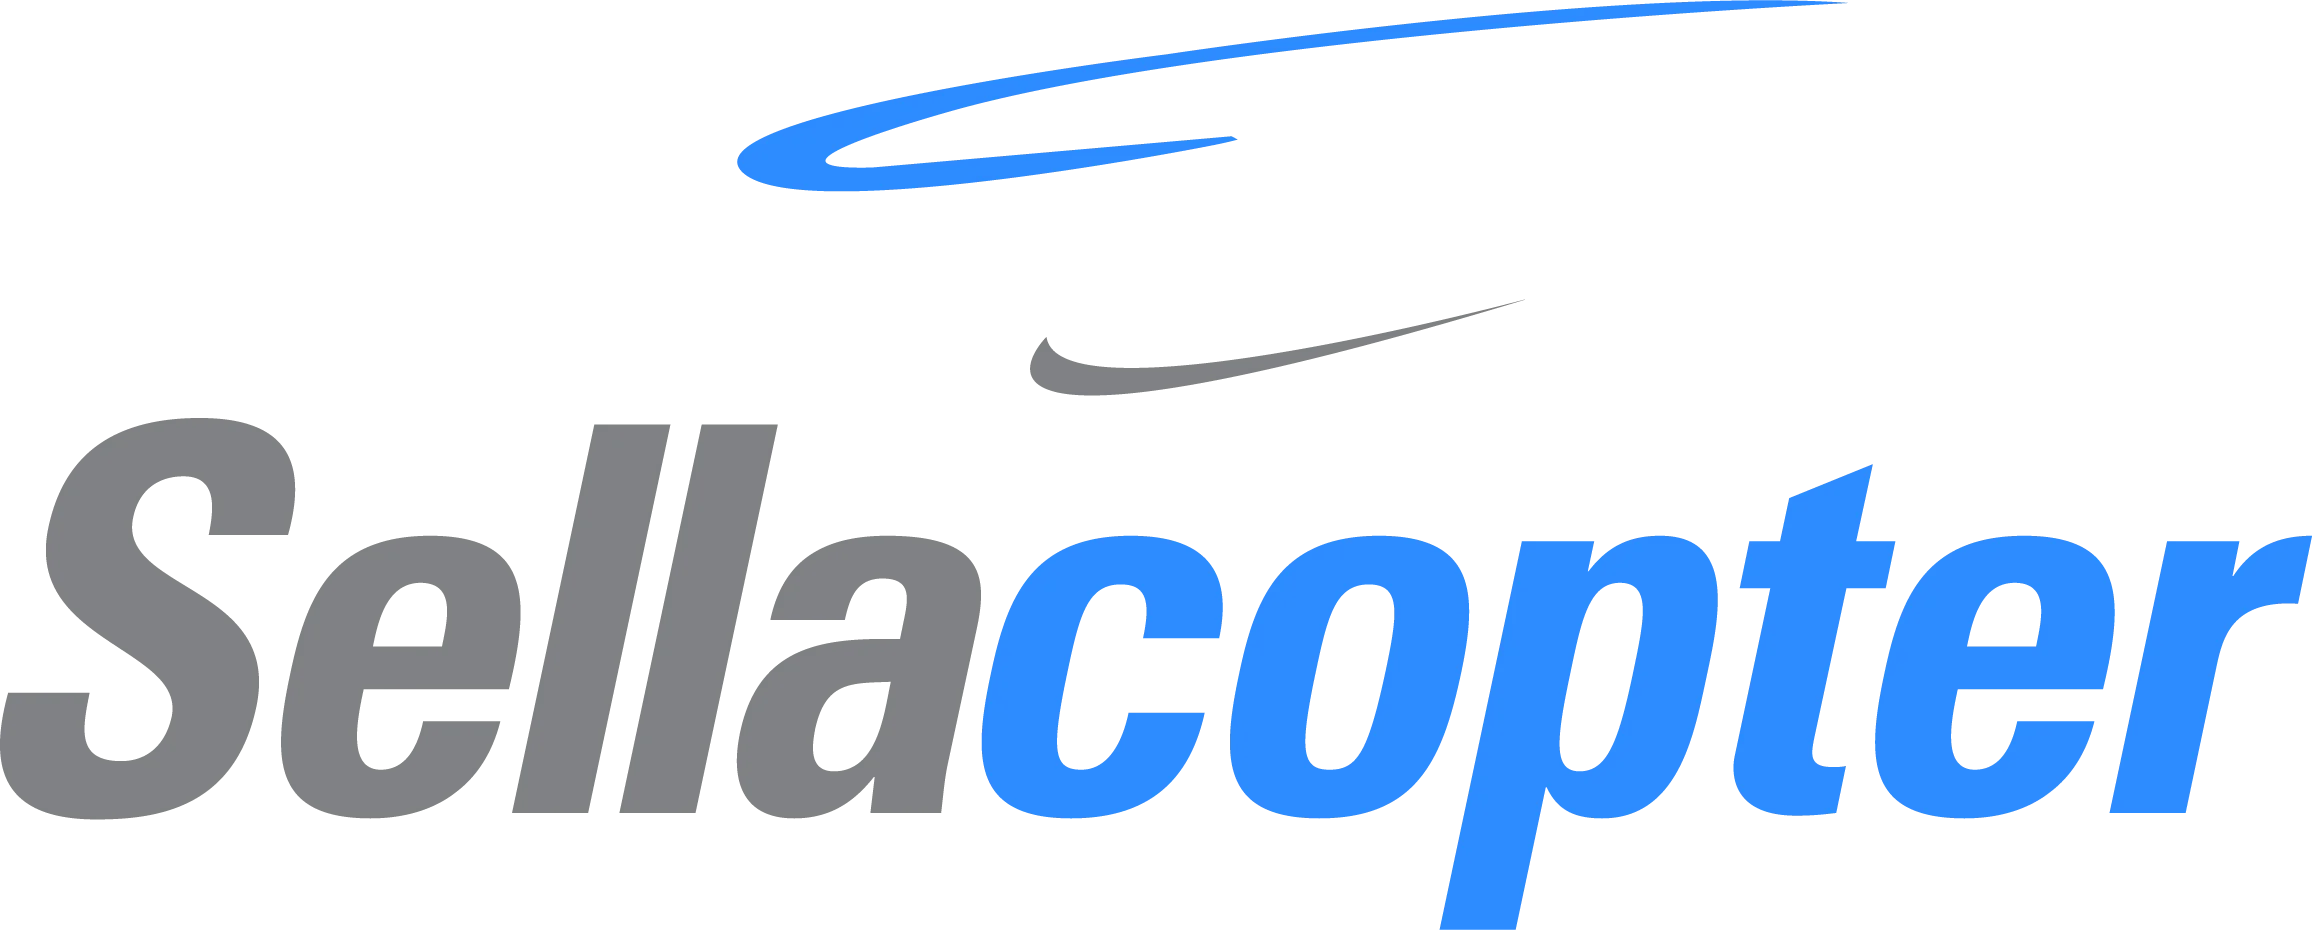 Sellacopter logo